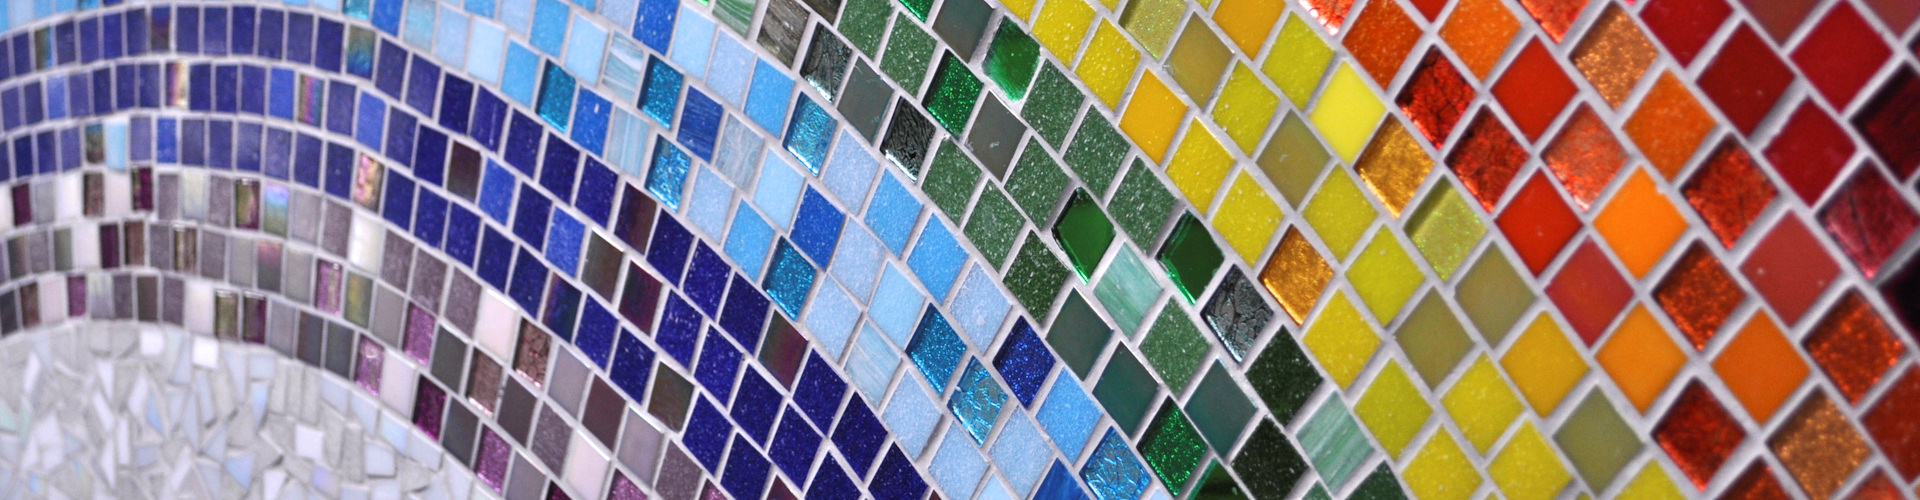 rainbow_mosaic